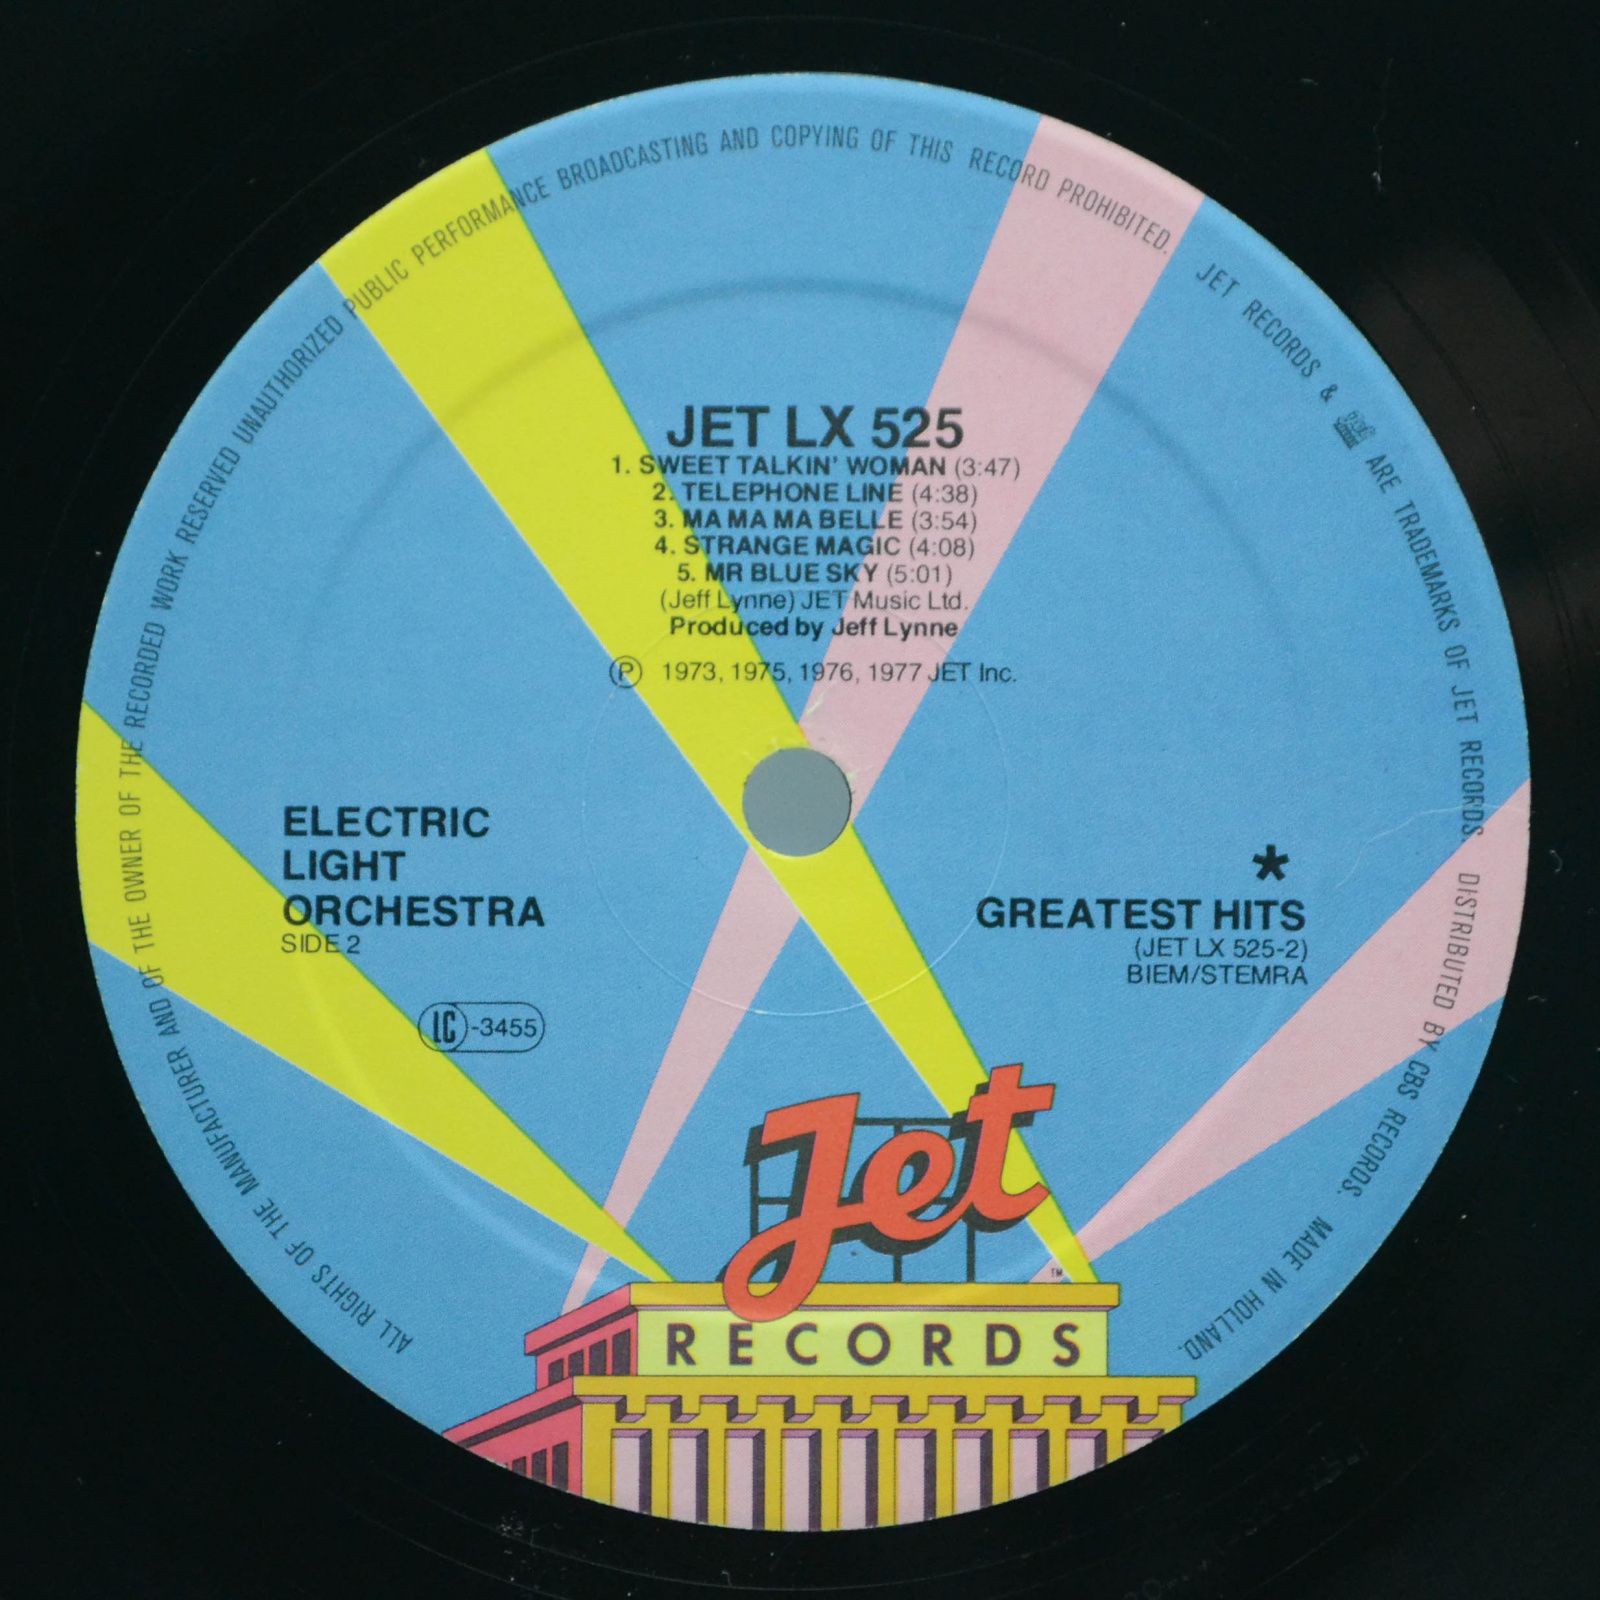 ELO — ELO's Greatest Hits, 1979